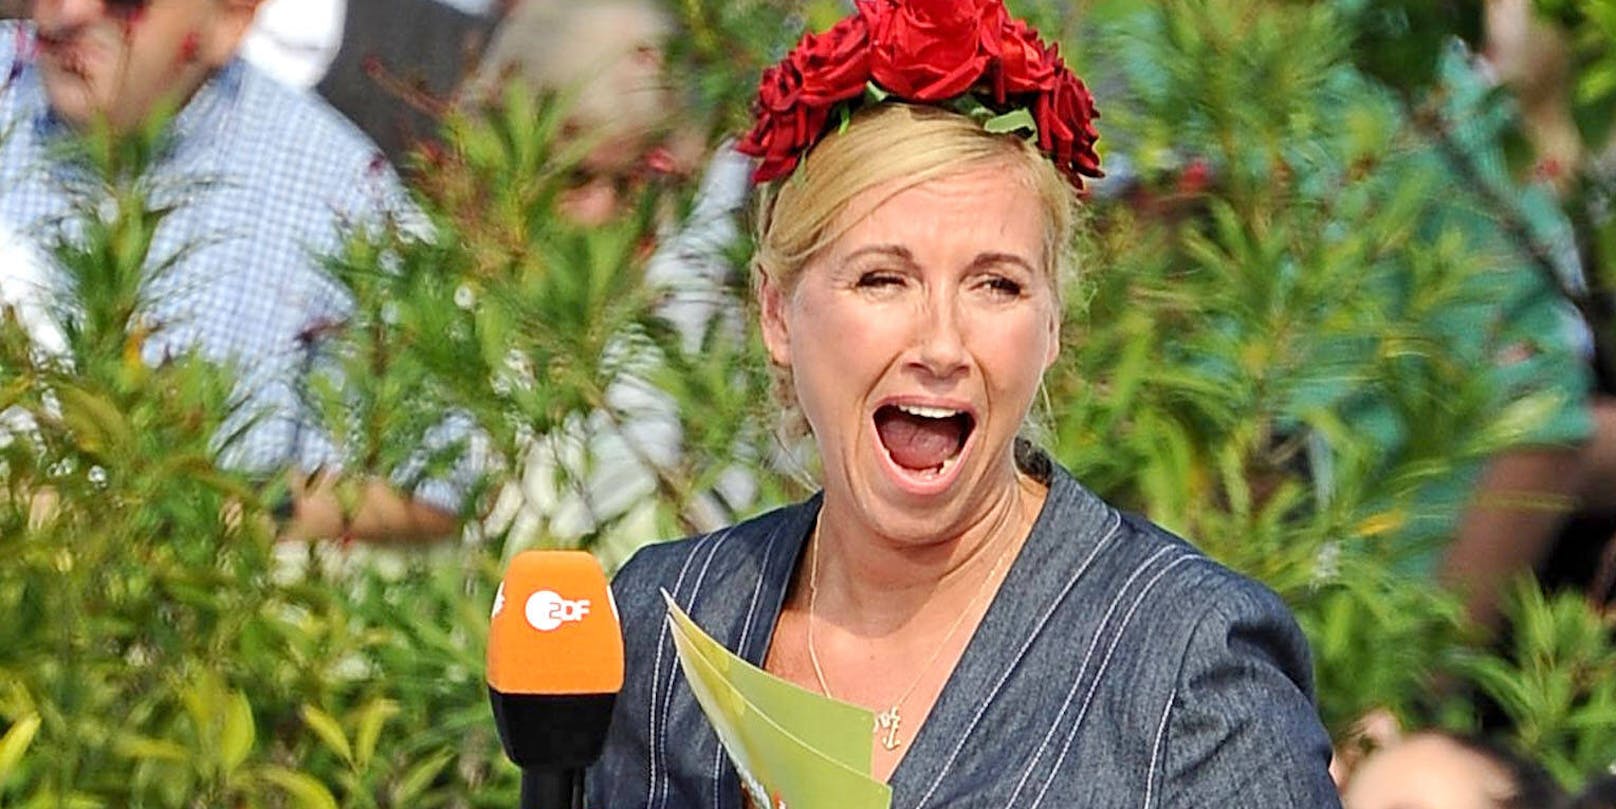 Andrea Kiewel moderiert seit dem Jahre 2000 den "Fernsehgarten" im ZDF.